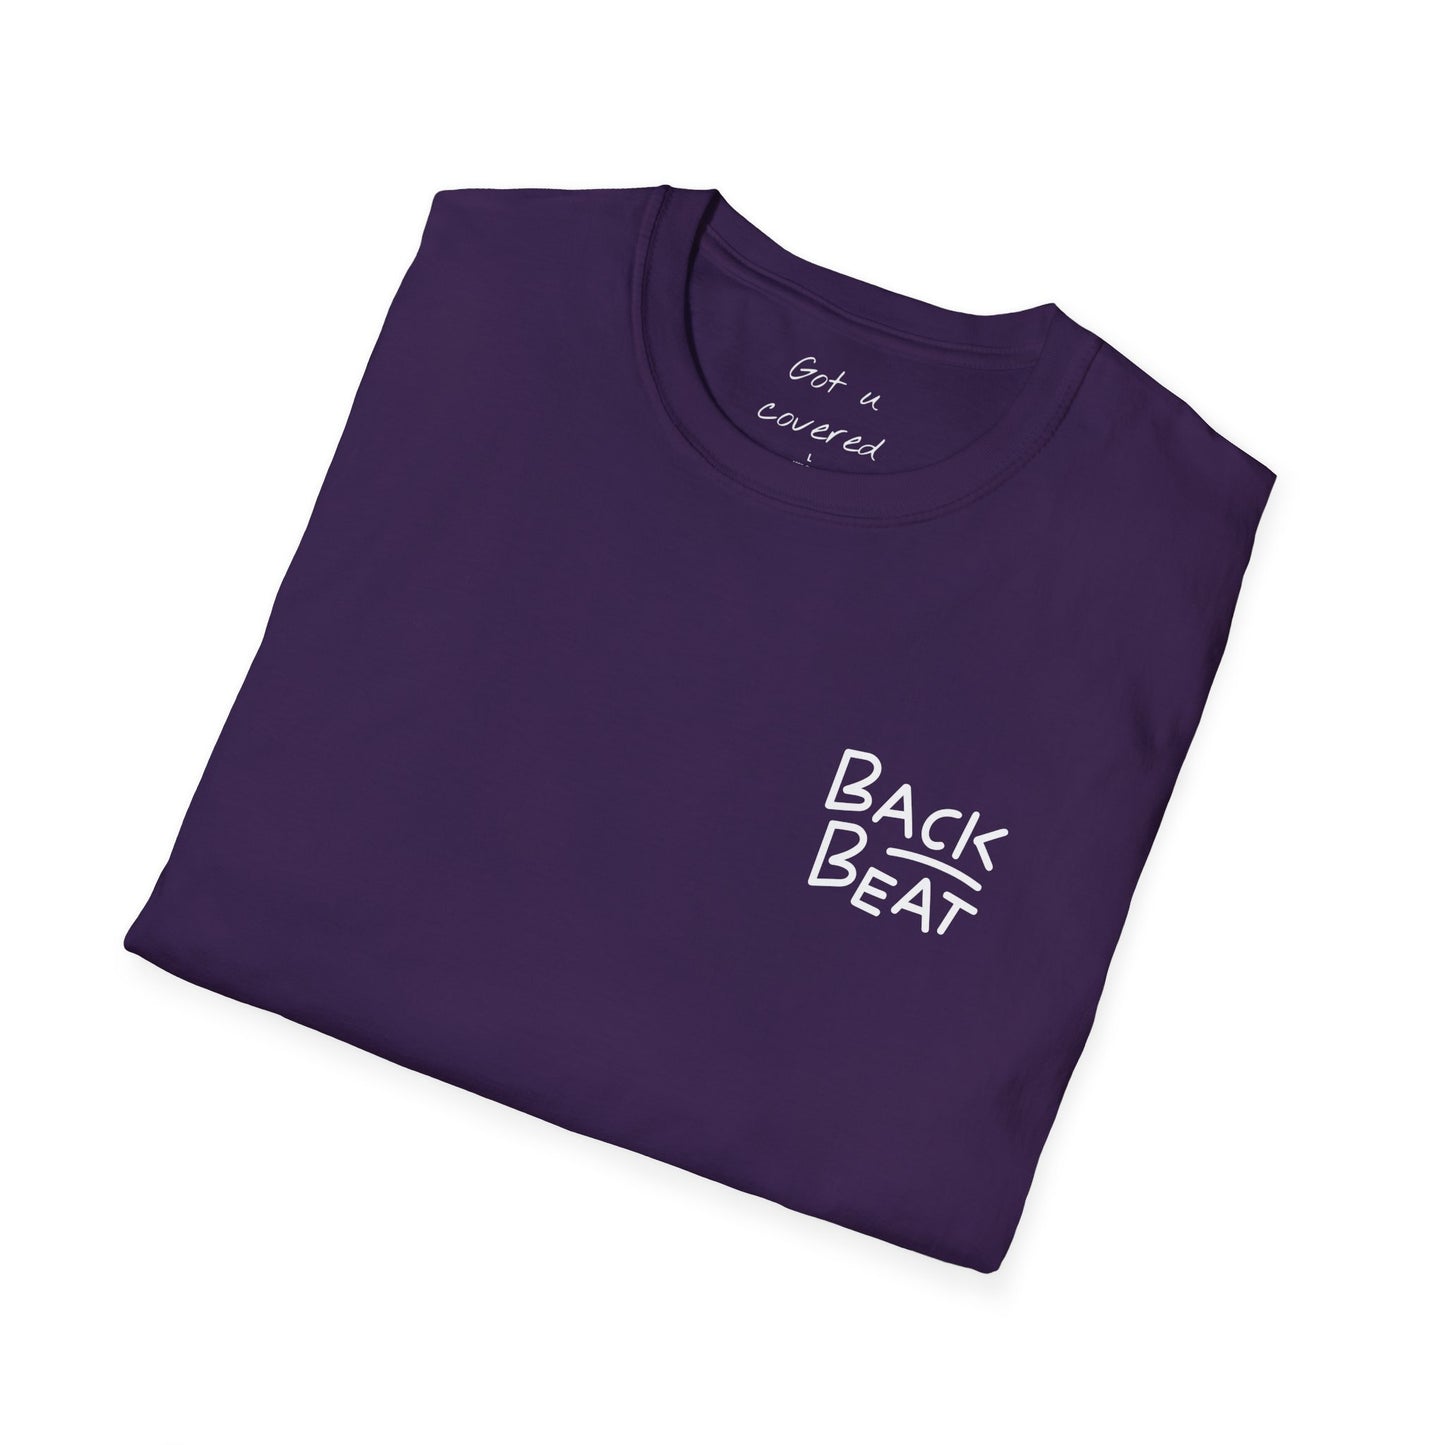 Surreal Wildlife Fusion T-Shirt | Artistic Tee | Backbeat Wear